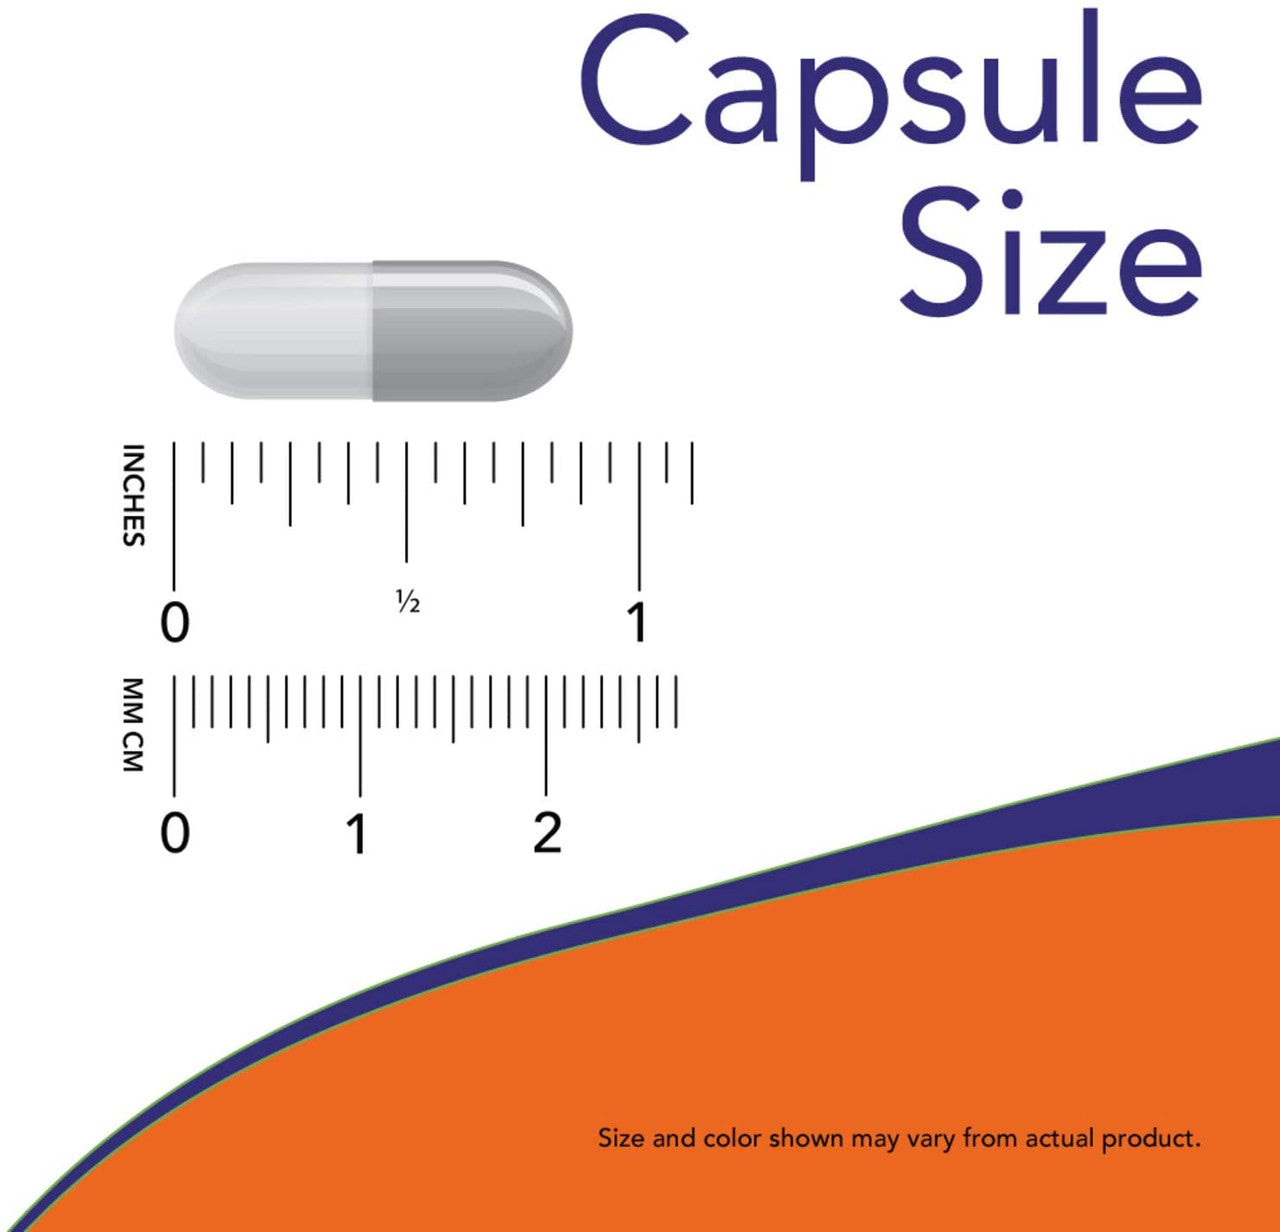 Now CurcuBrain capsule size